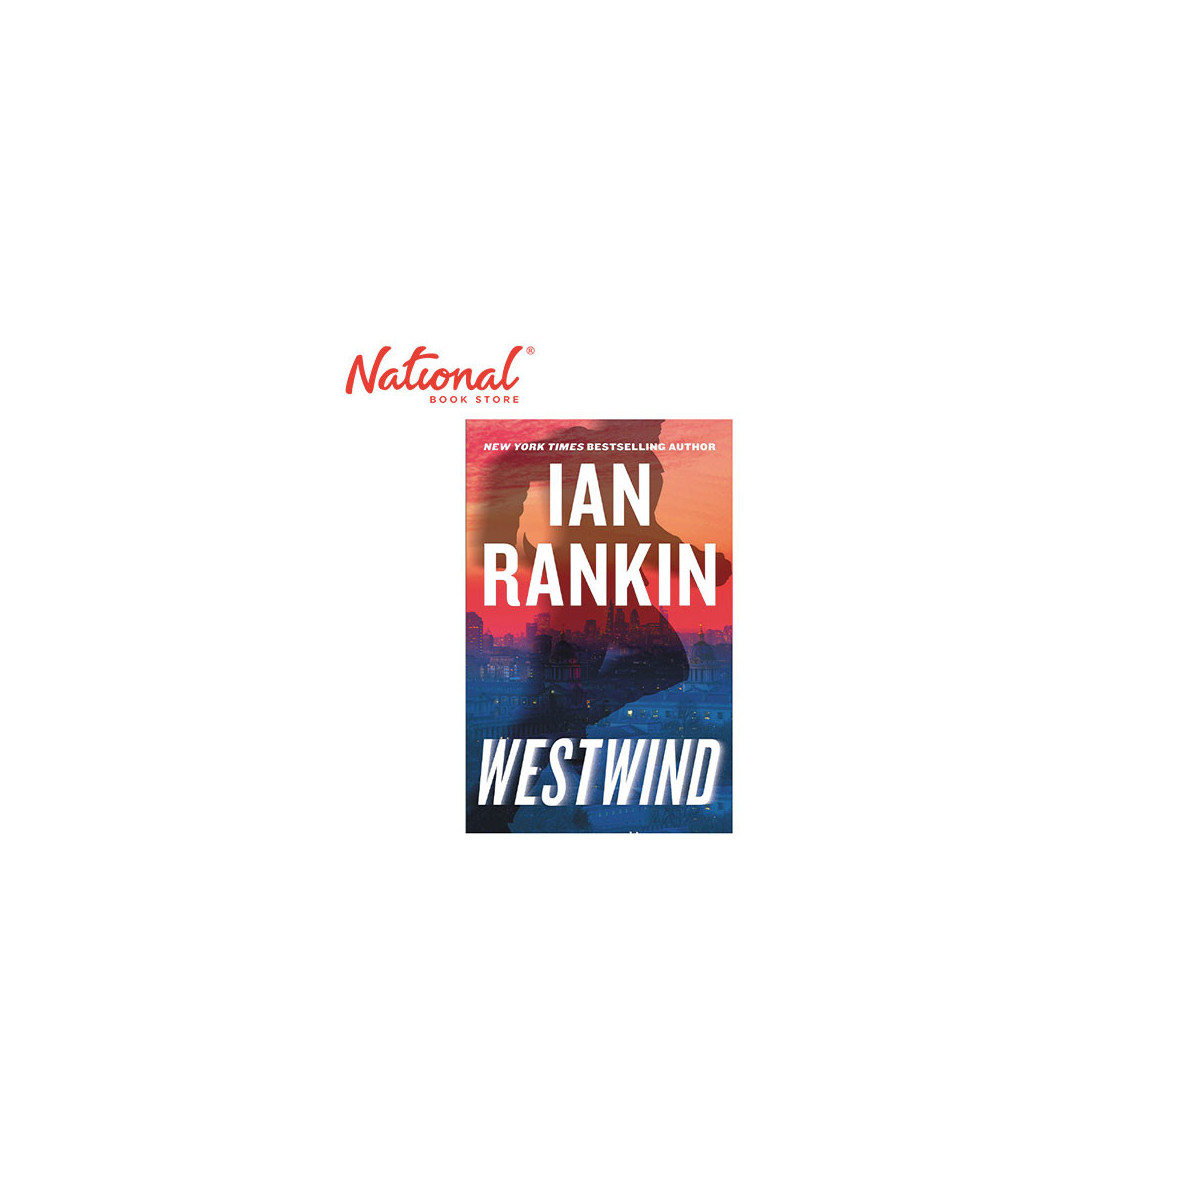 Westwind by Ian Rankin - Trade Paperback - Thriller - Mystery - Suspense